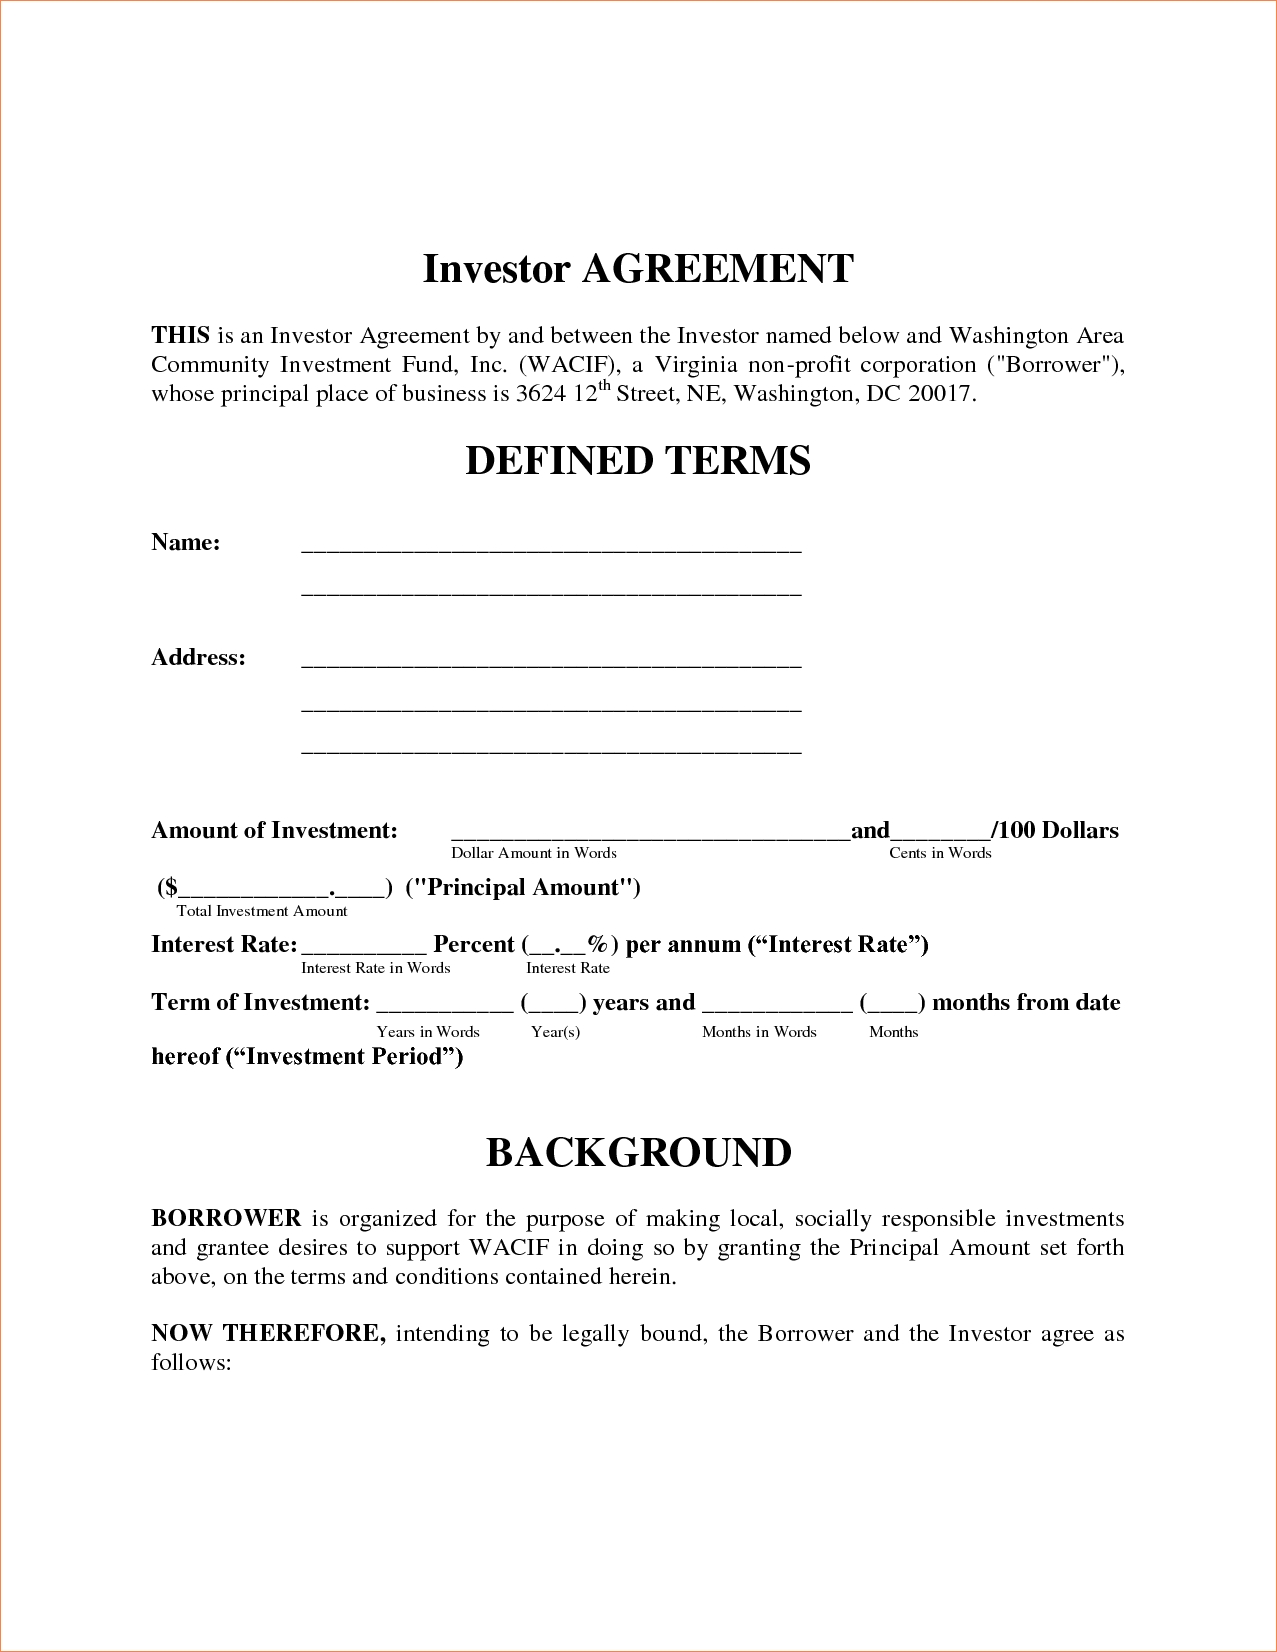 artist investor agreement template 15 investment agreement 